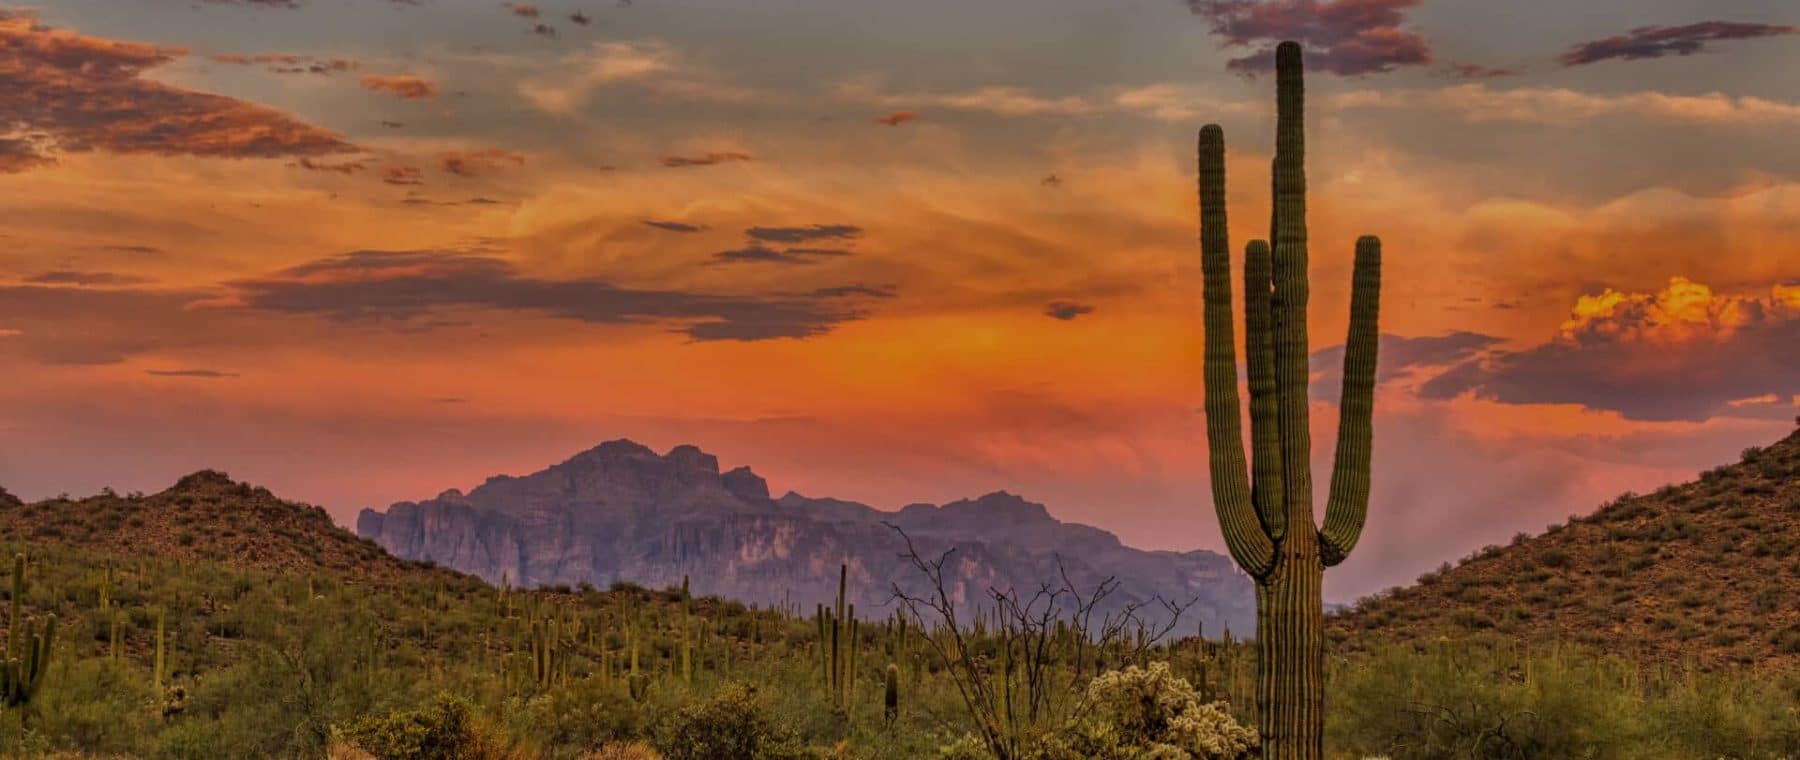 Cactus in the Phoenix desert